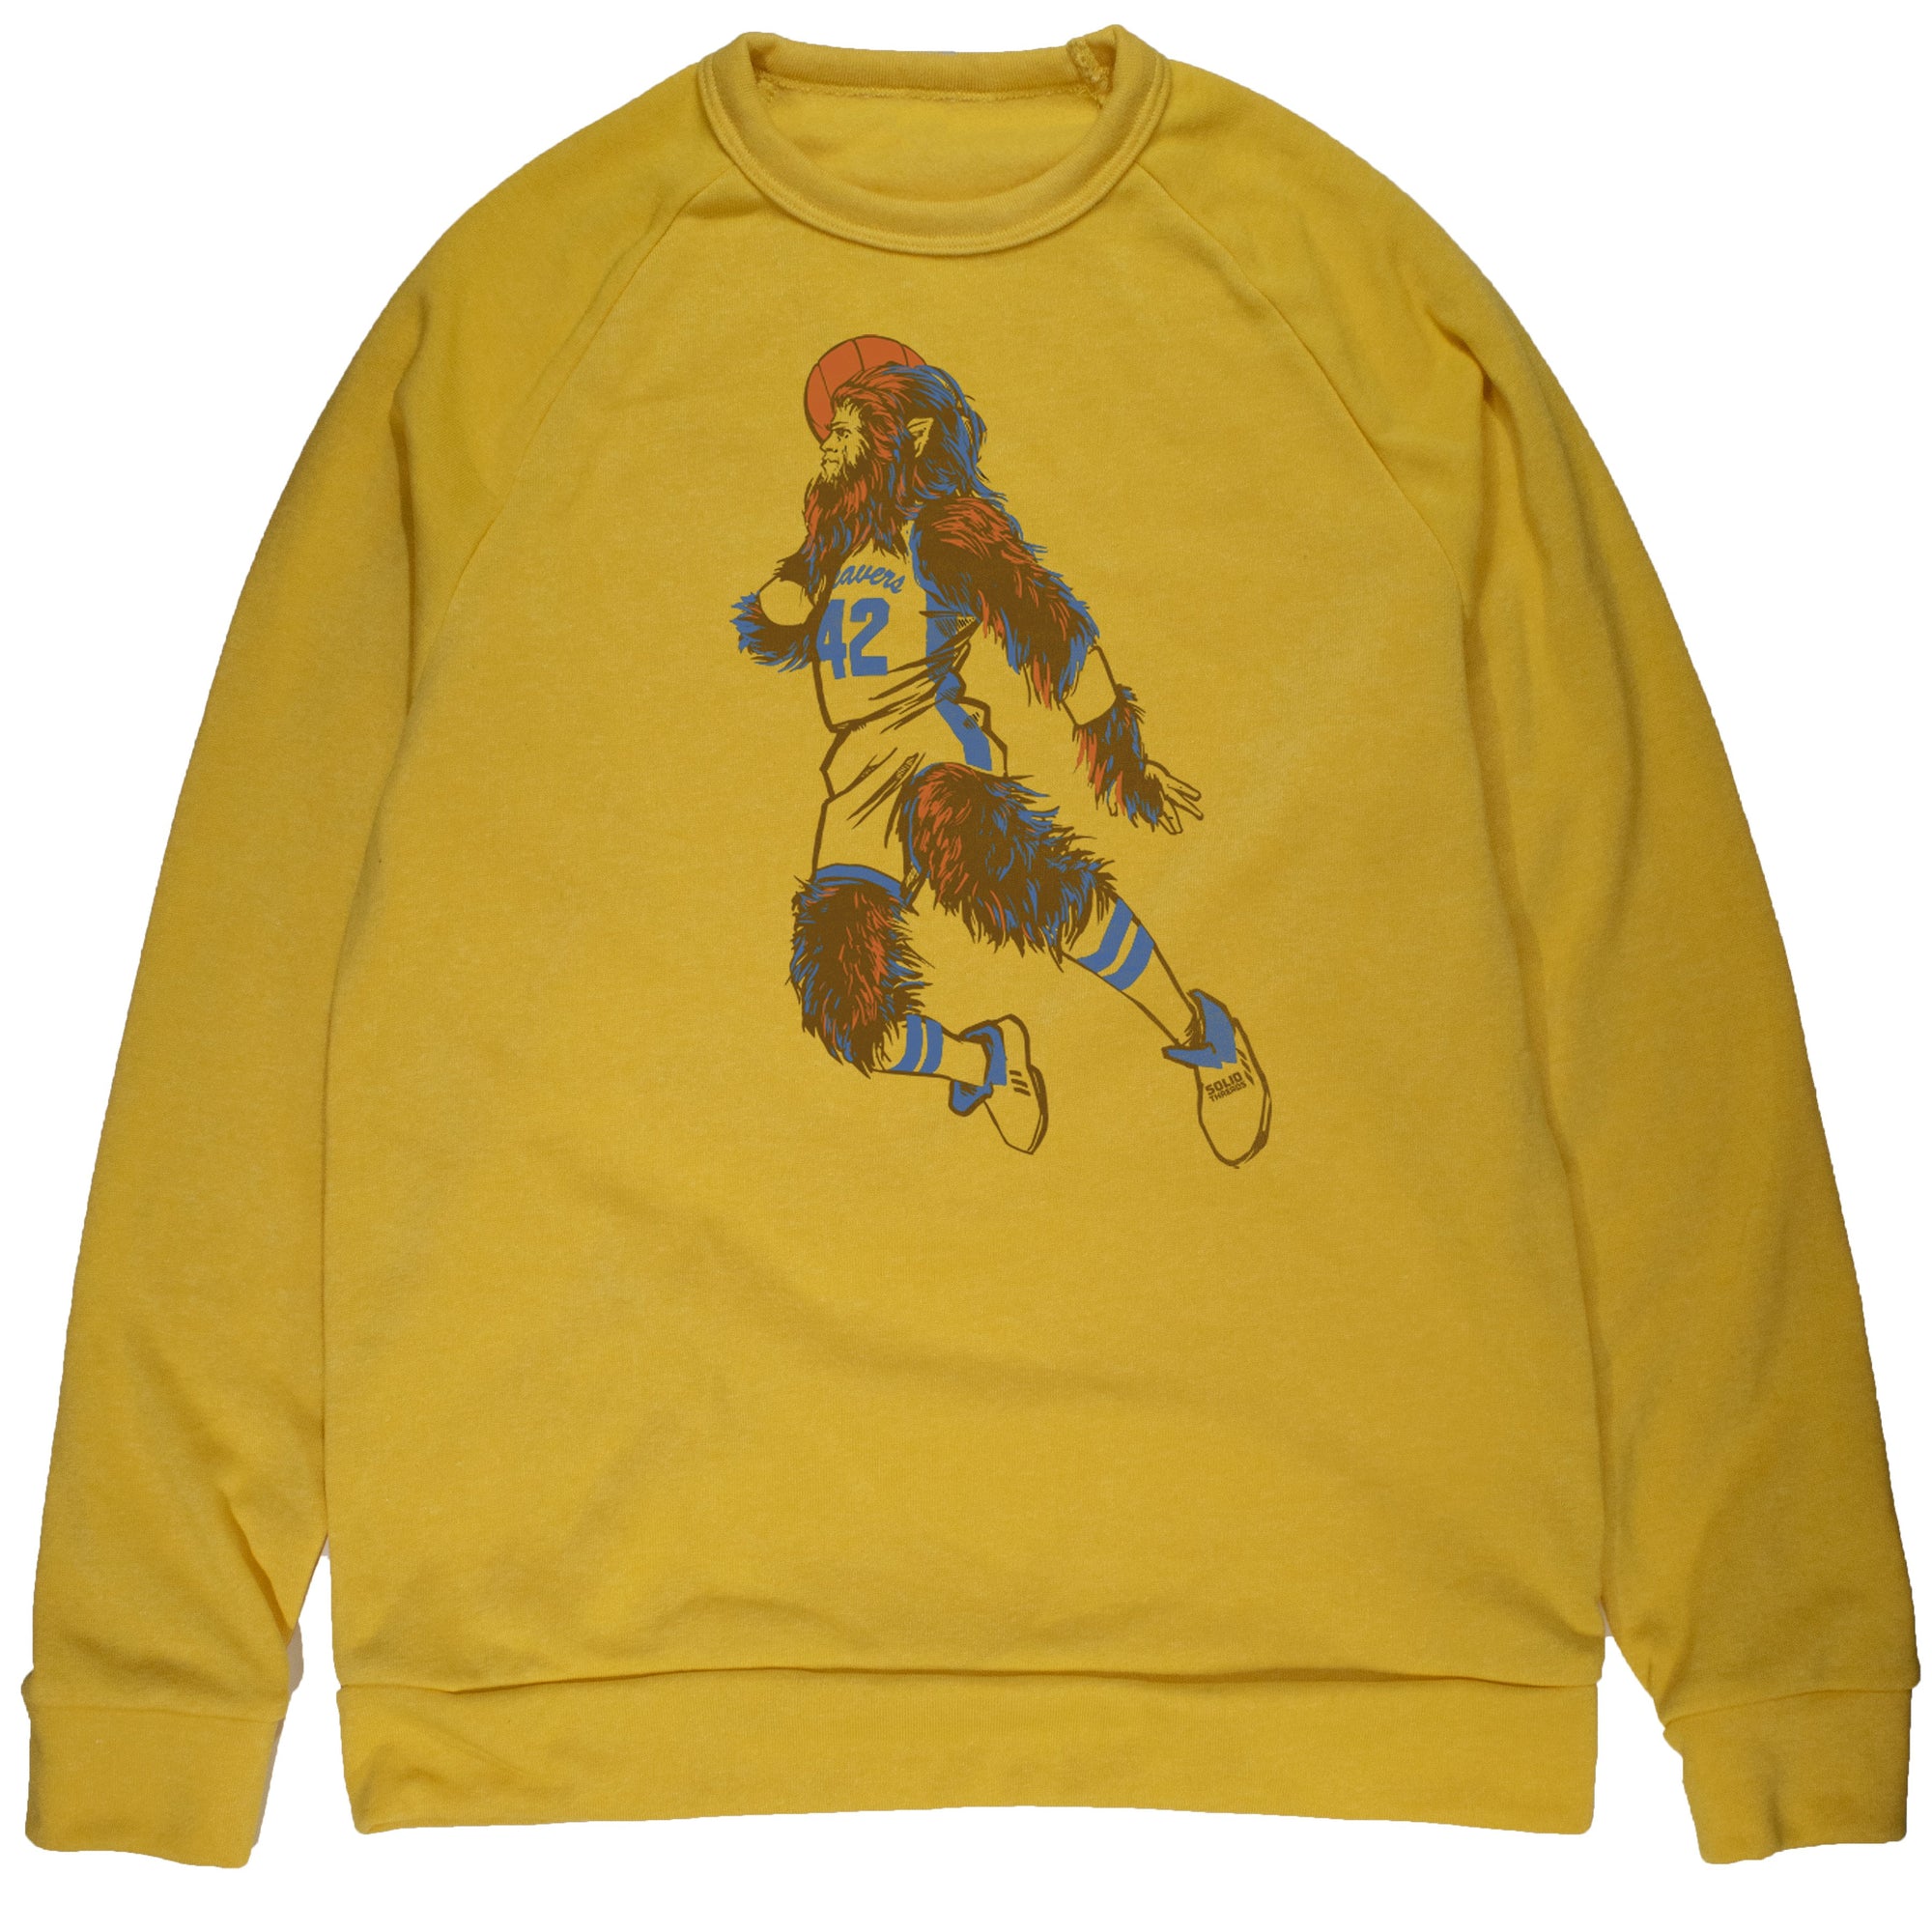 Teen Wolf Vintage Inspired Fleece Crewneck Sweatshirt with retro Michael J Fox graphic | Solid Threads